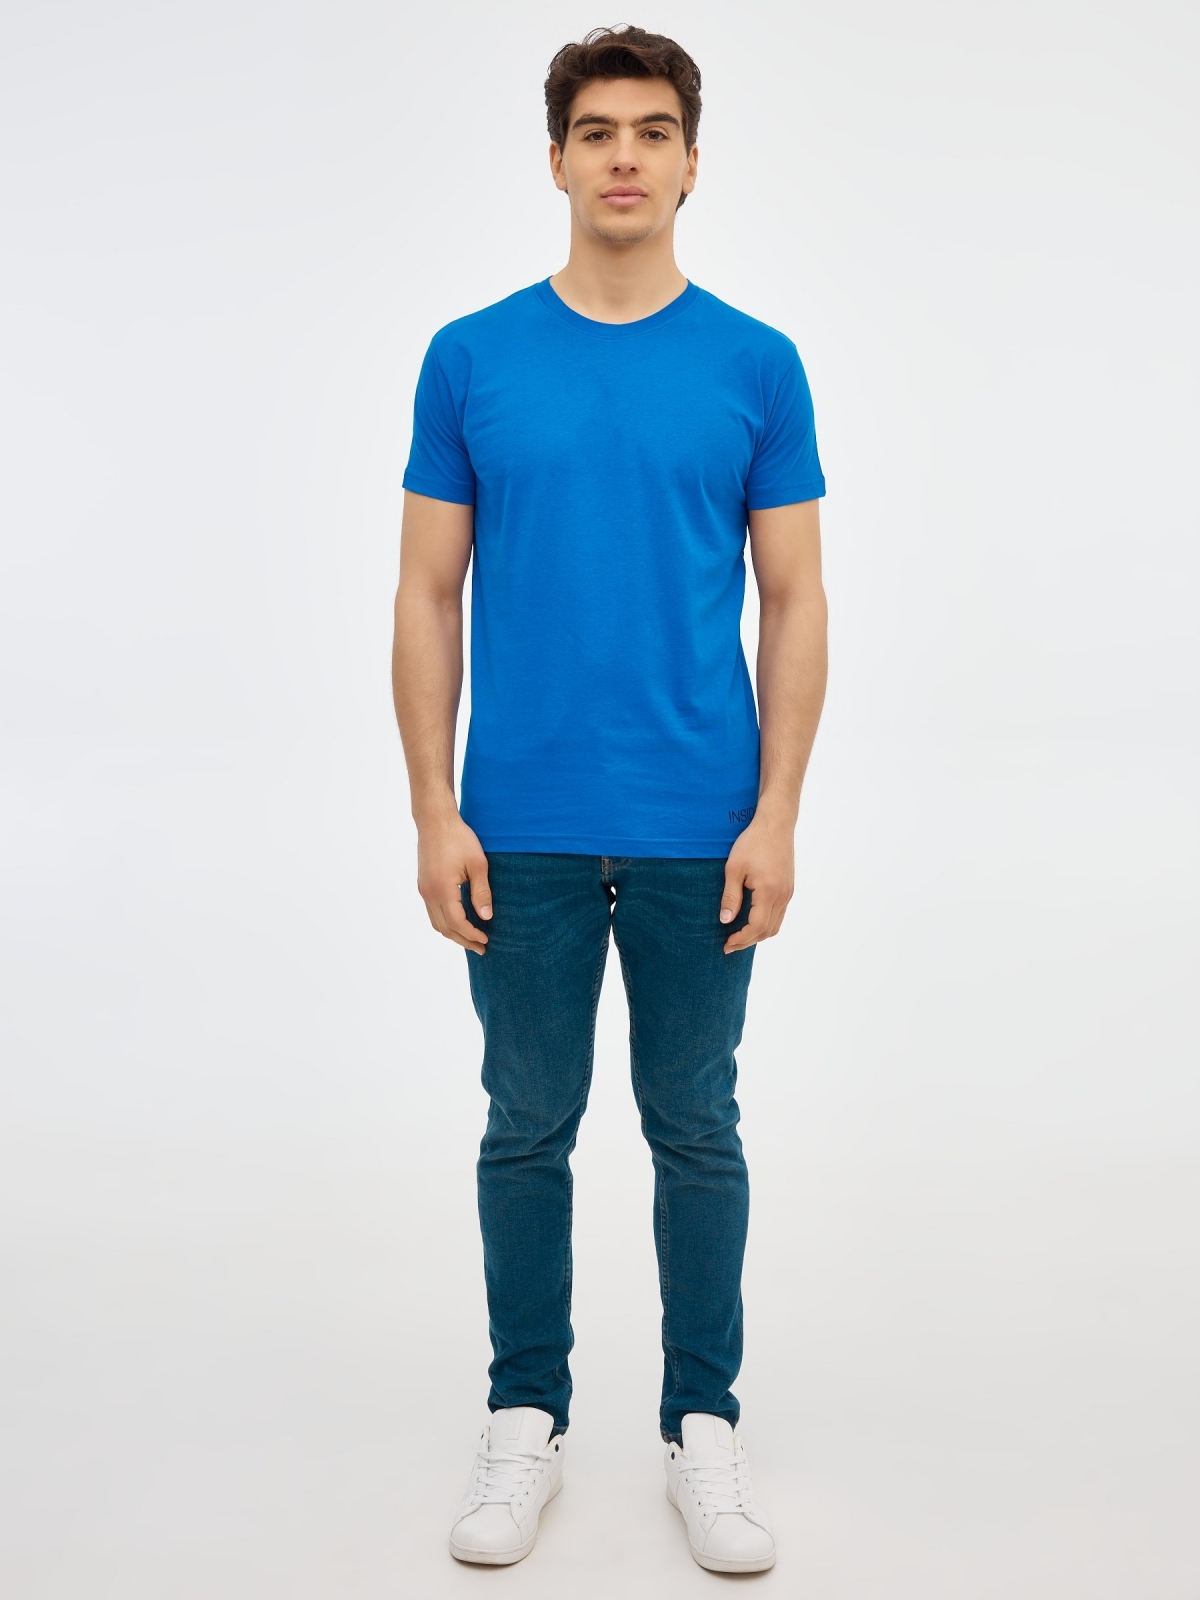 T-shirt básica manga curta azul ducados vista geral frontal